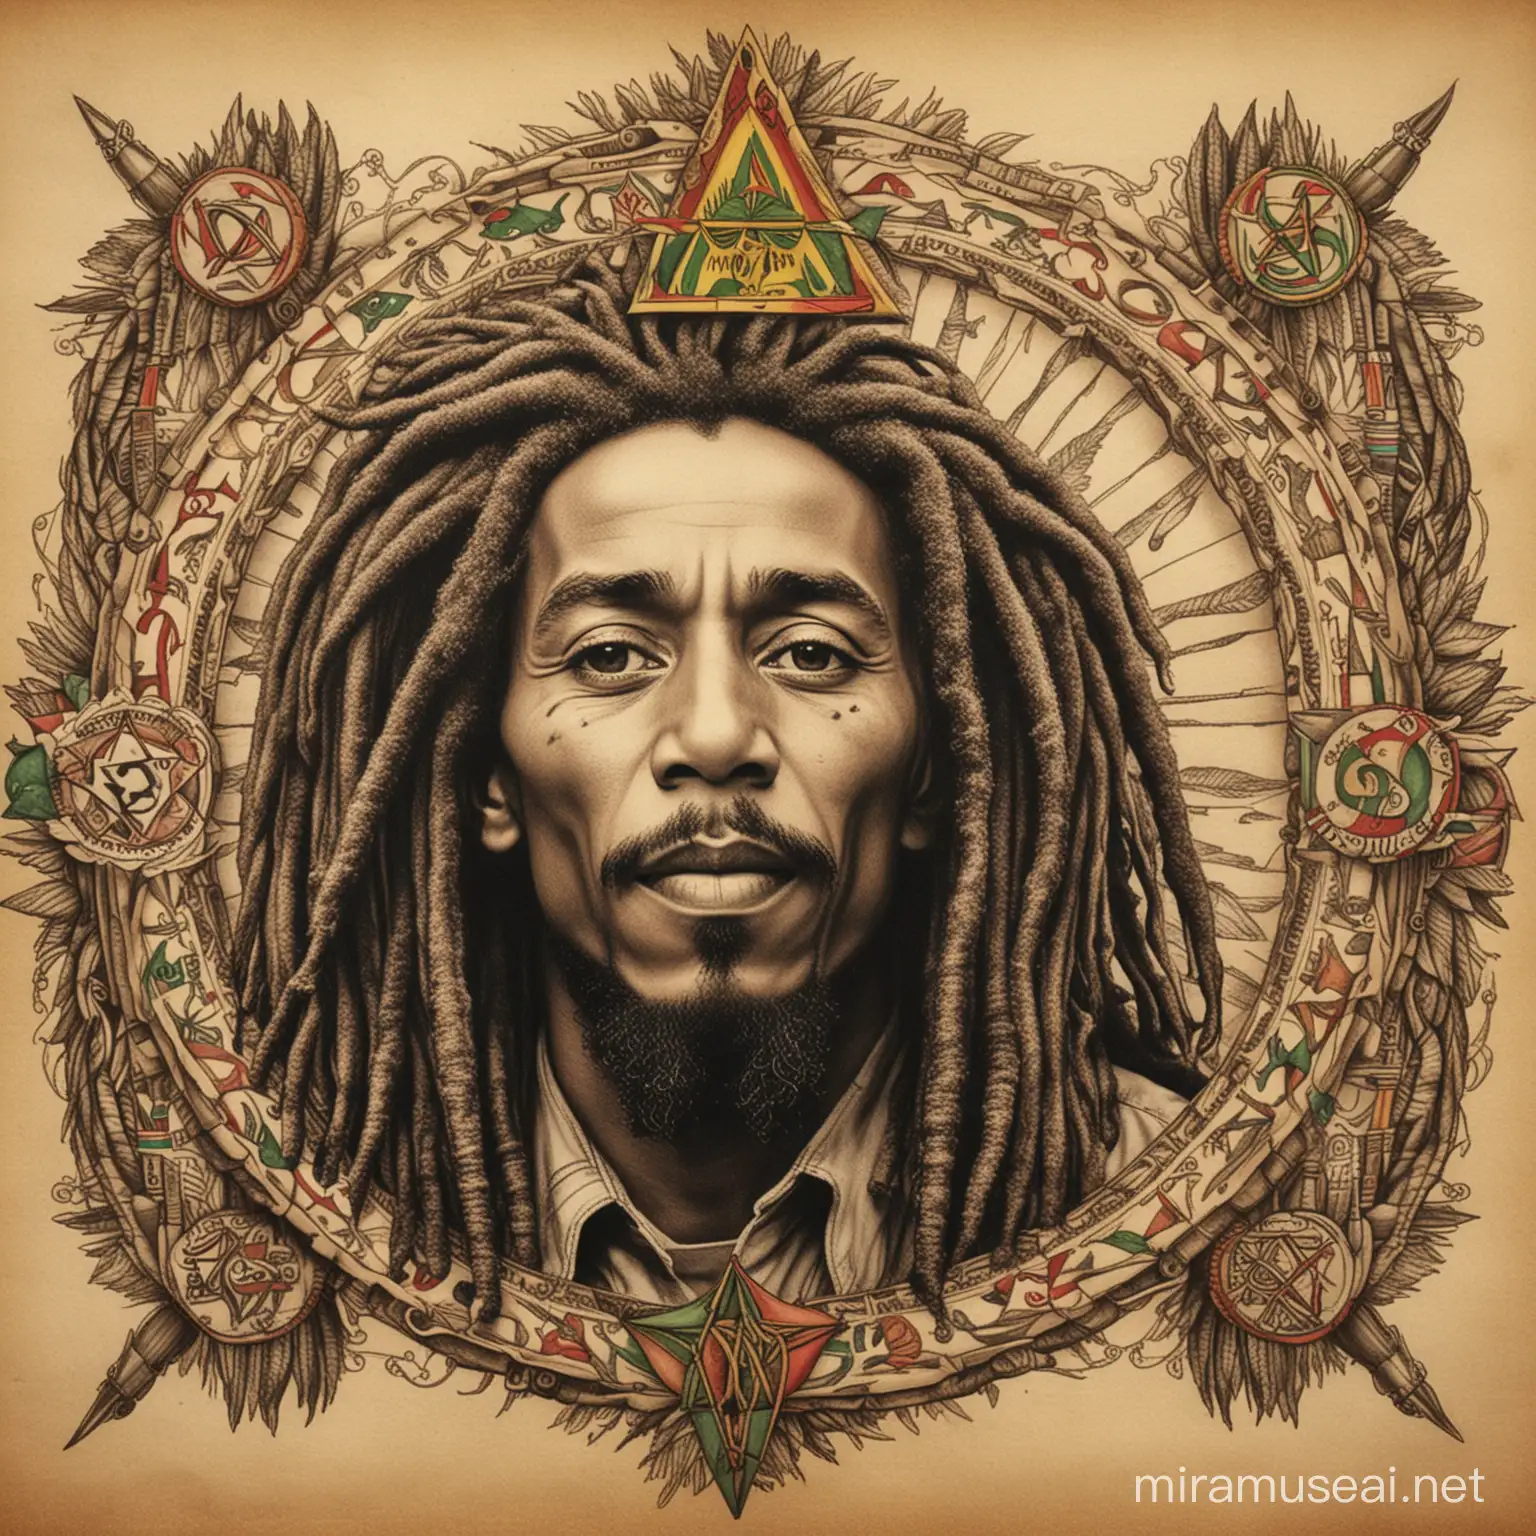 bob Marley drawing with Rastafarian symbols